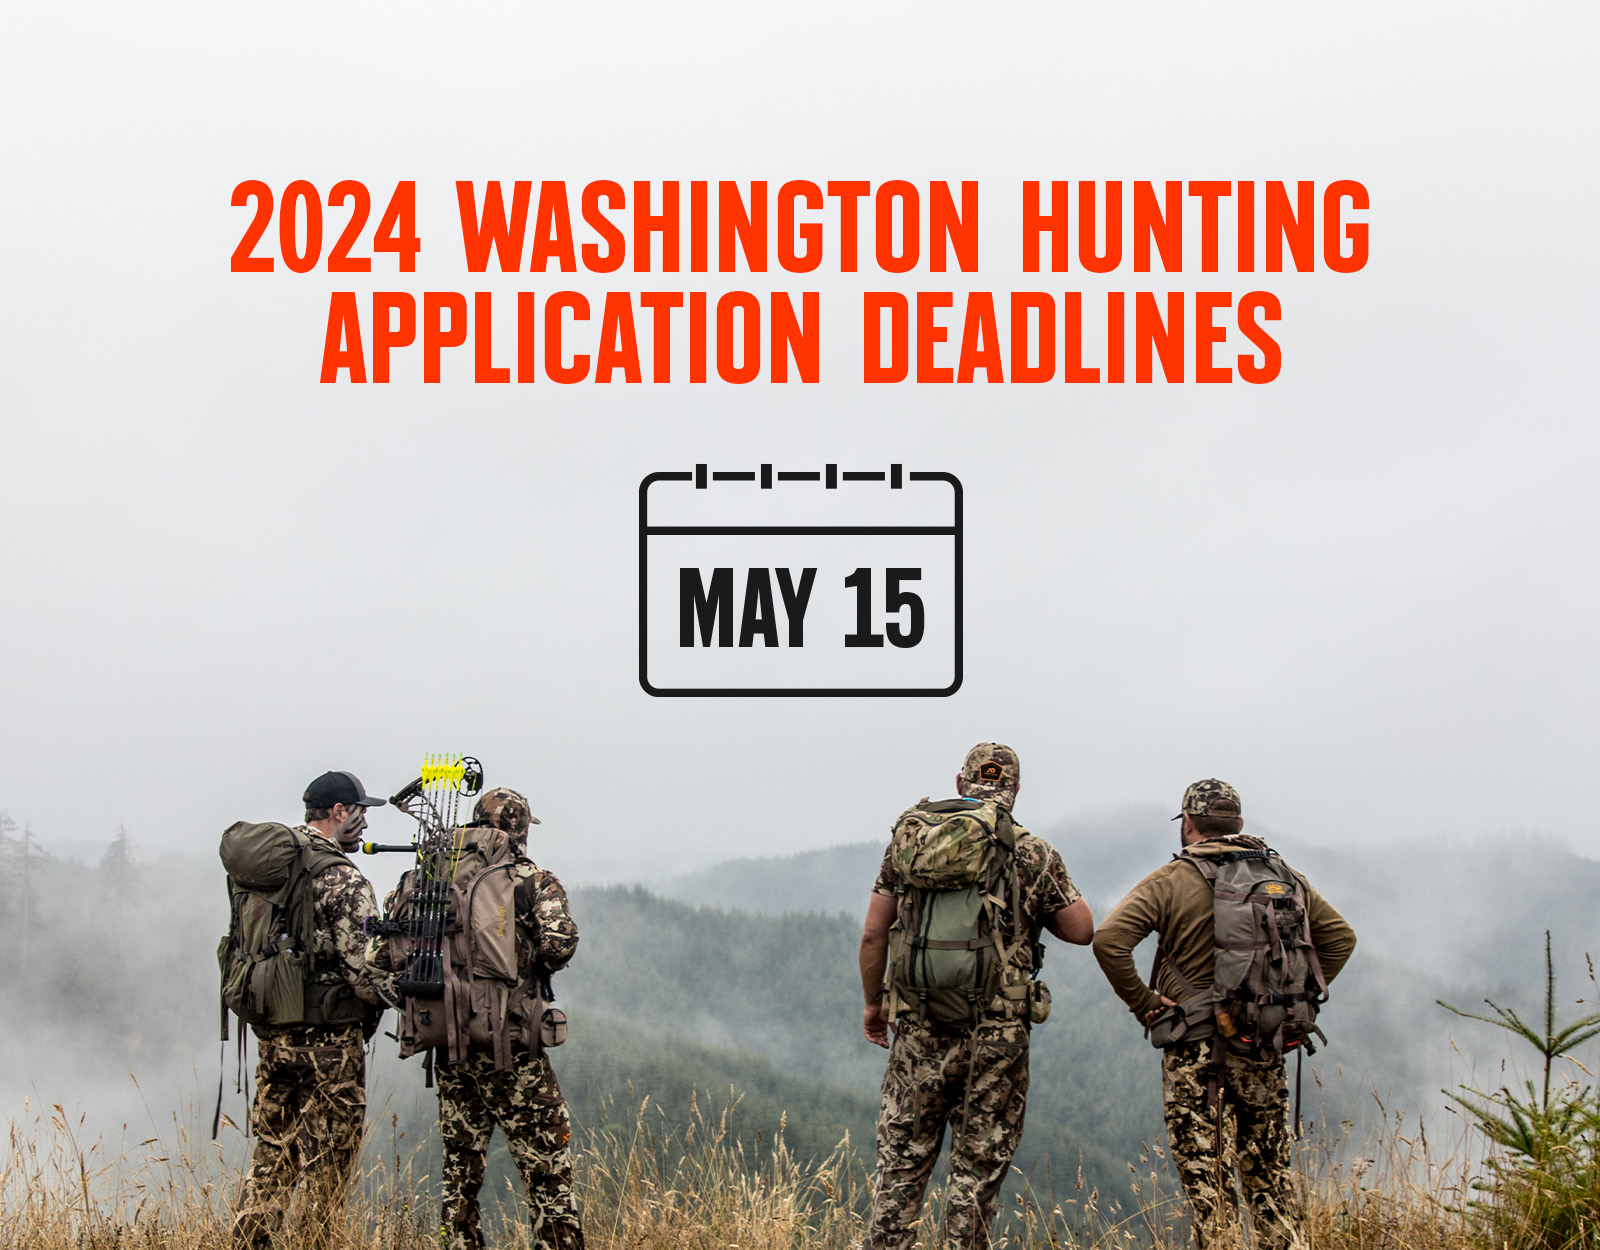 Washington hunting application season deadlines 